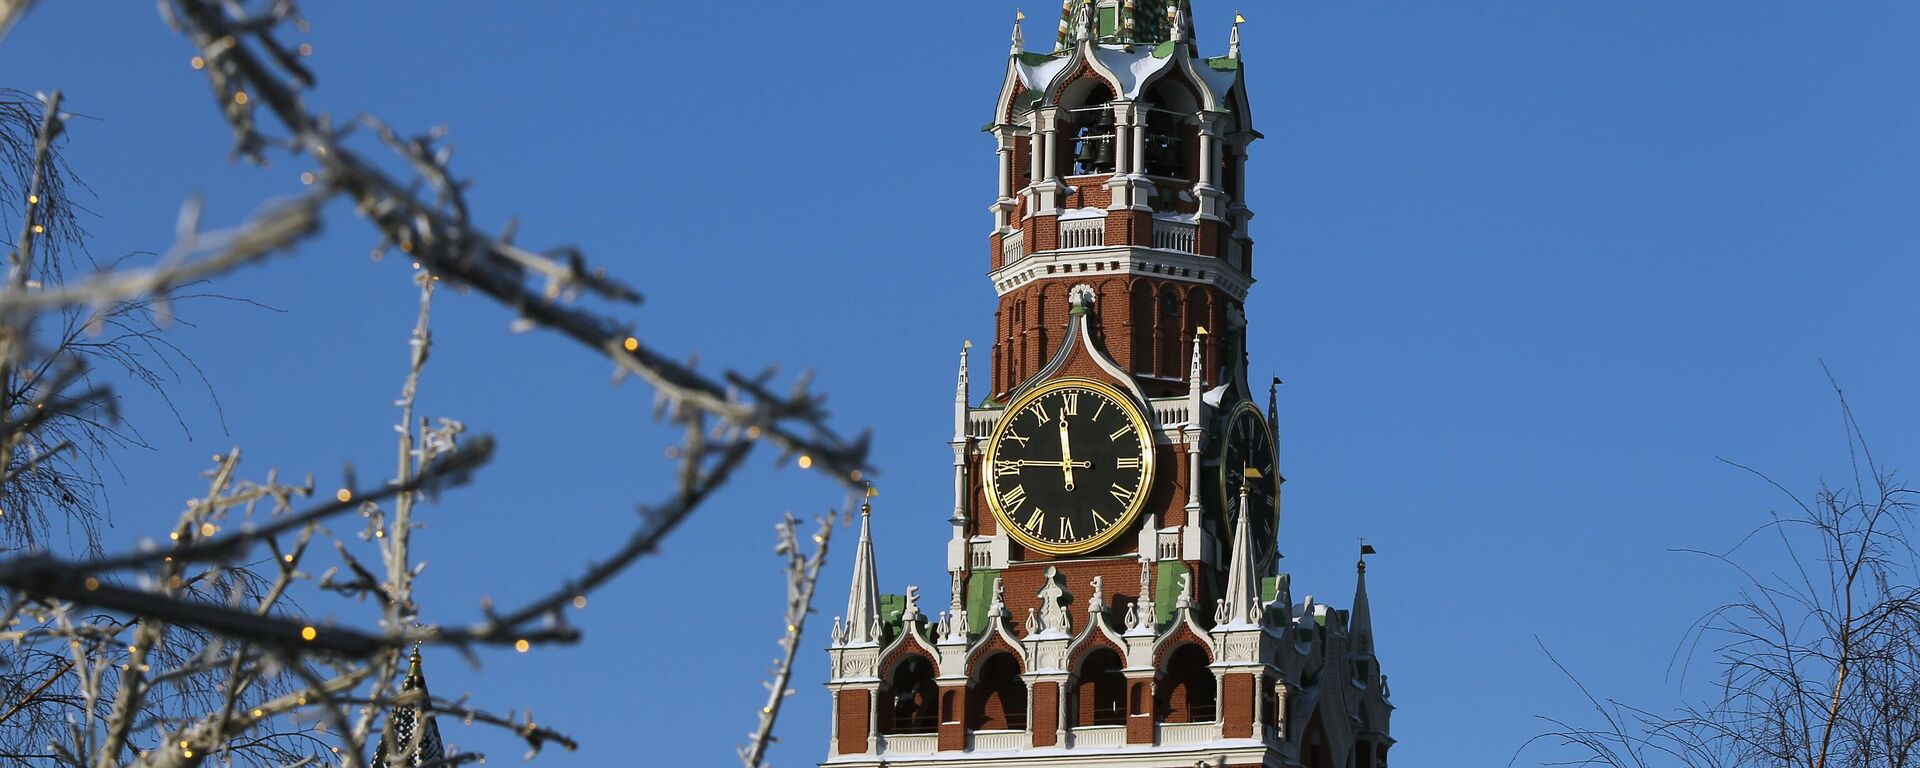 Tháp Spasskaya của Điện Kremlin Moscow. - Sputnik Việt Nam, 1920, 17.05.2022